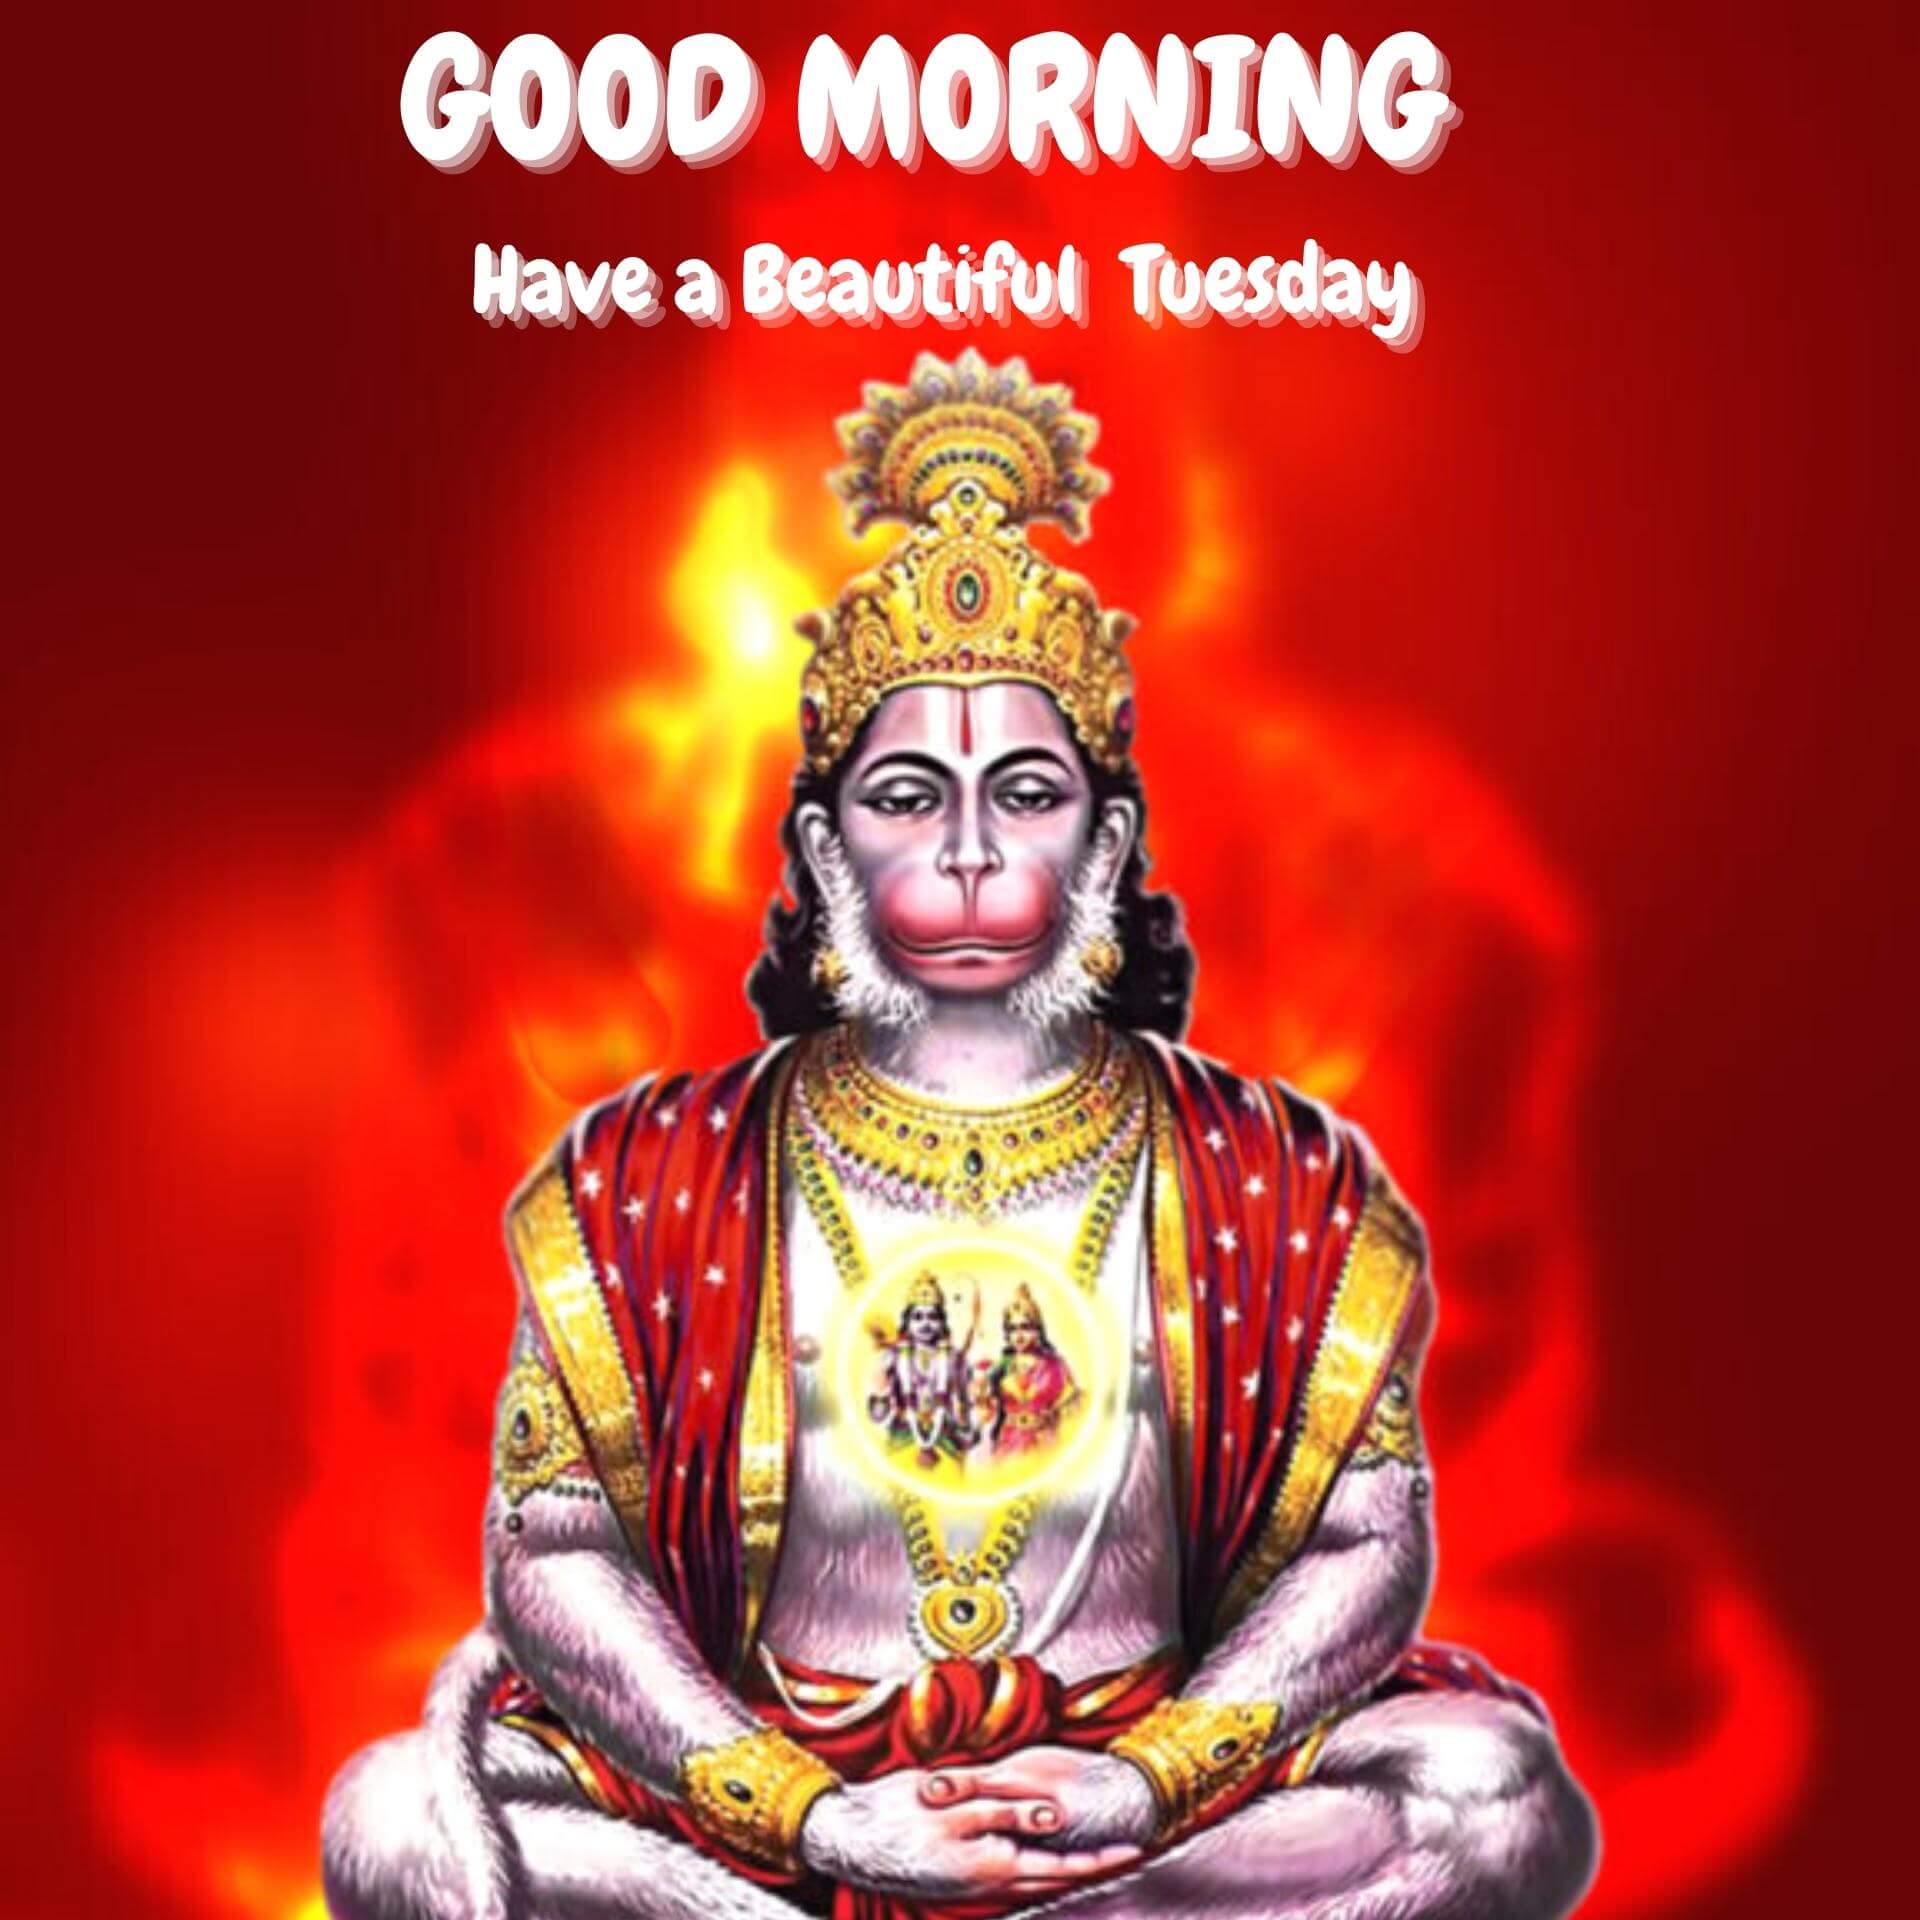 Hanuman JI Tuesday good morning Pics Wallpaper Download